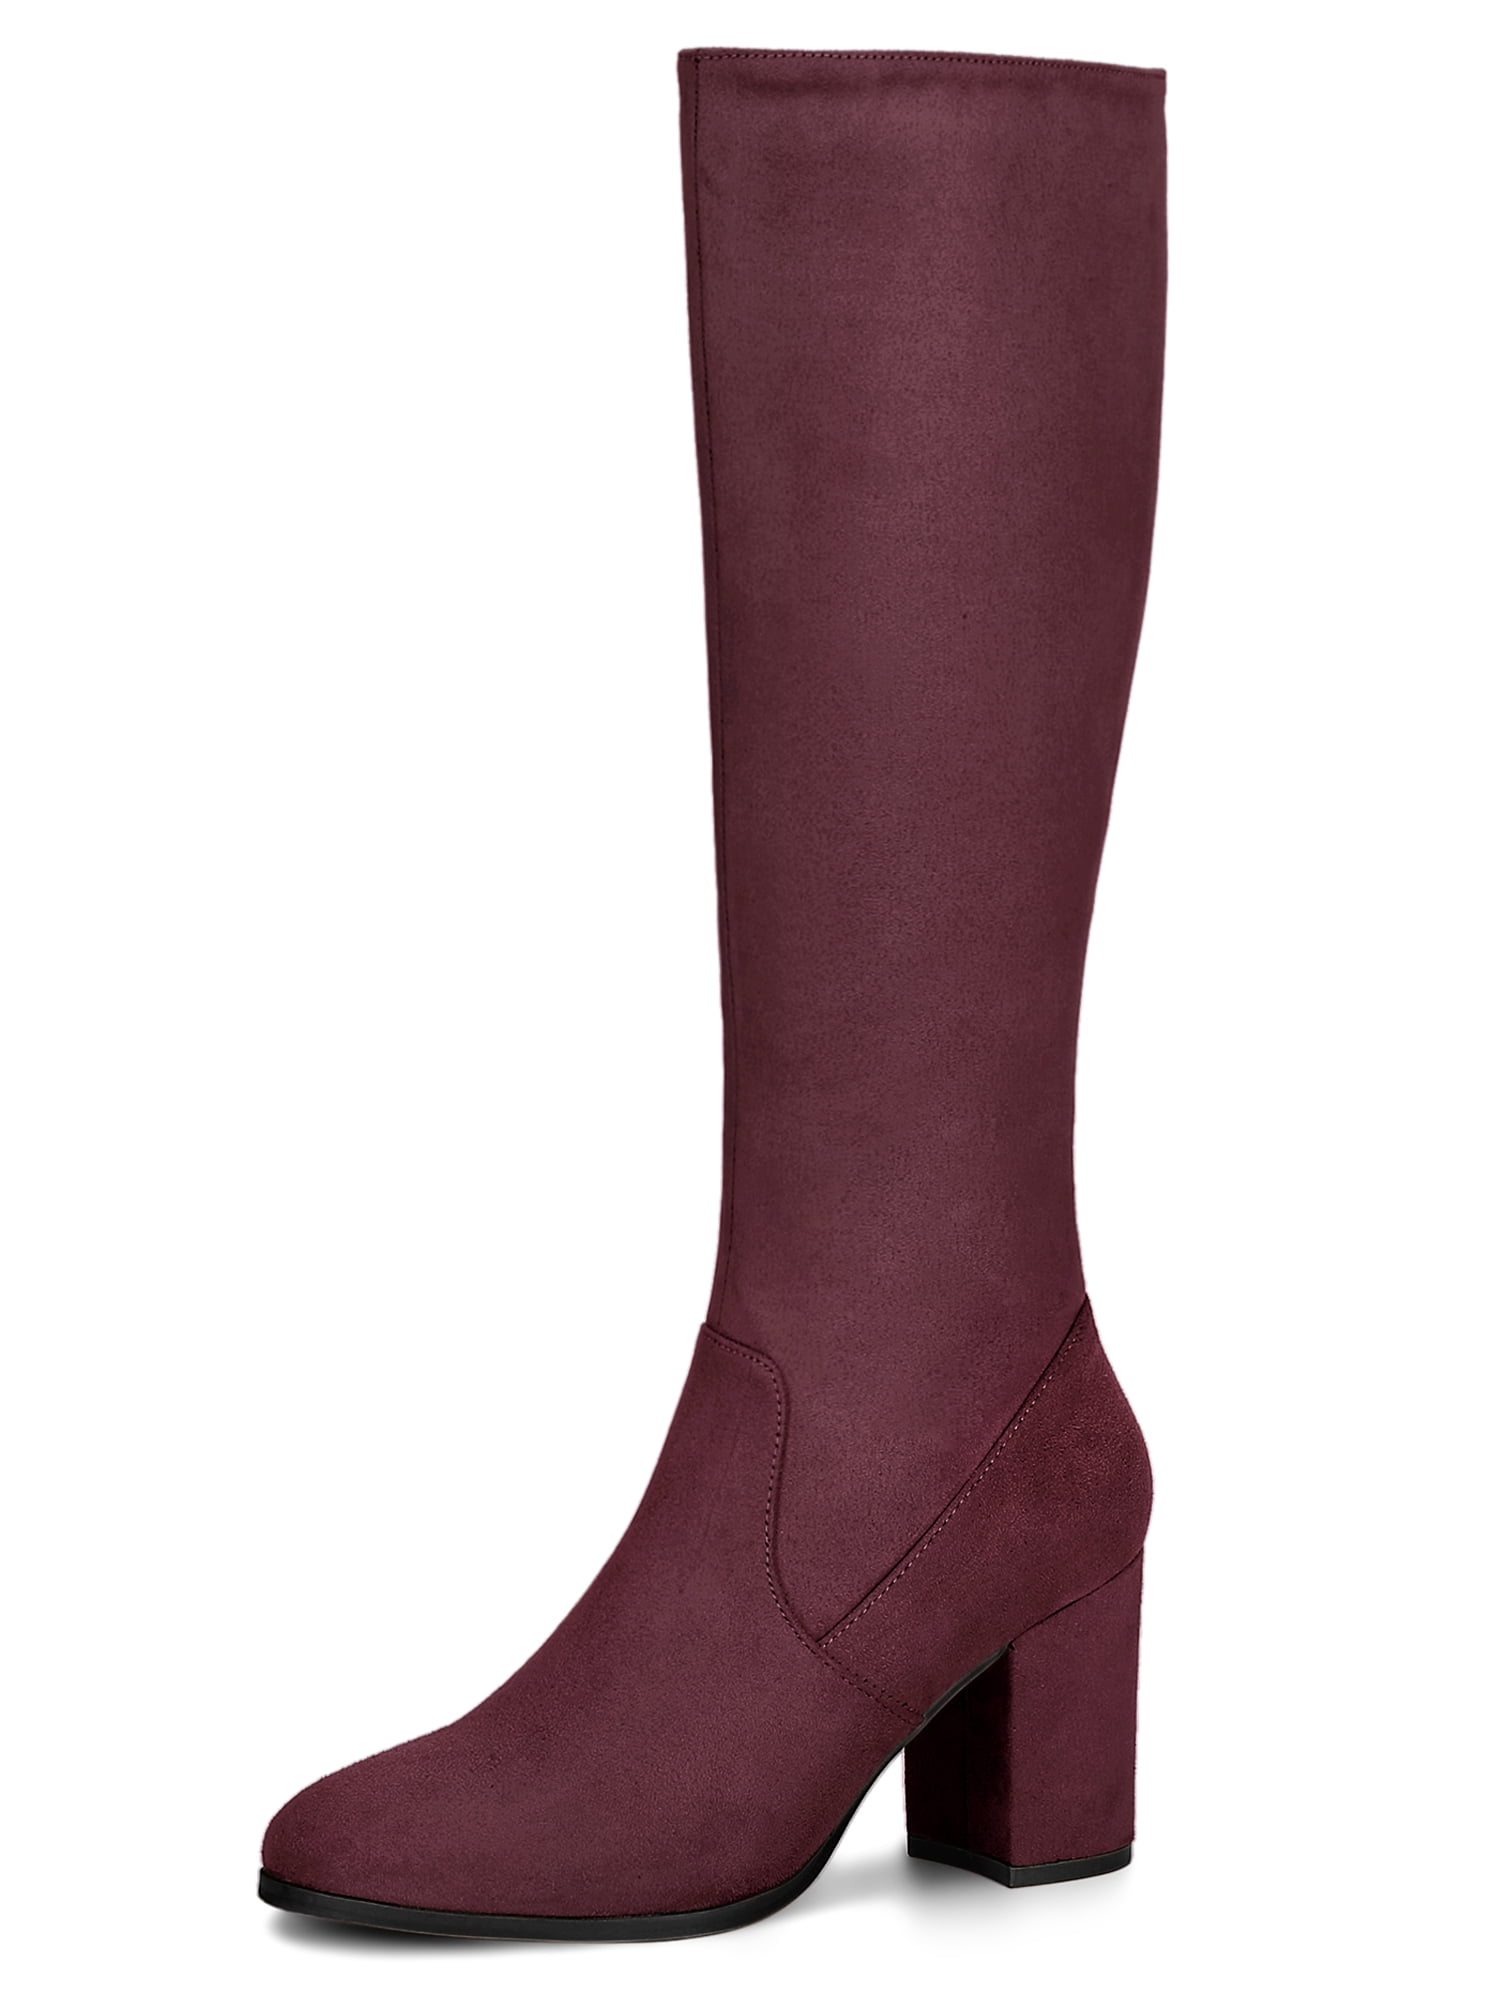 burgundy boots canada